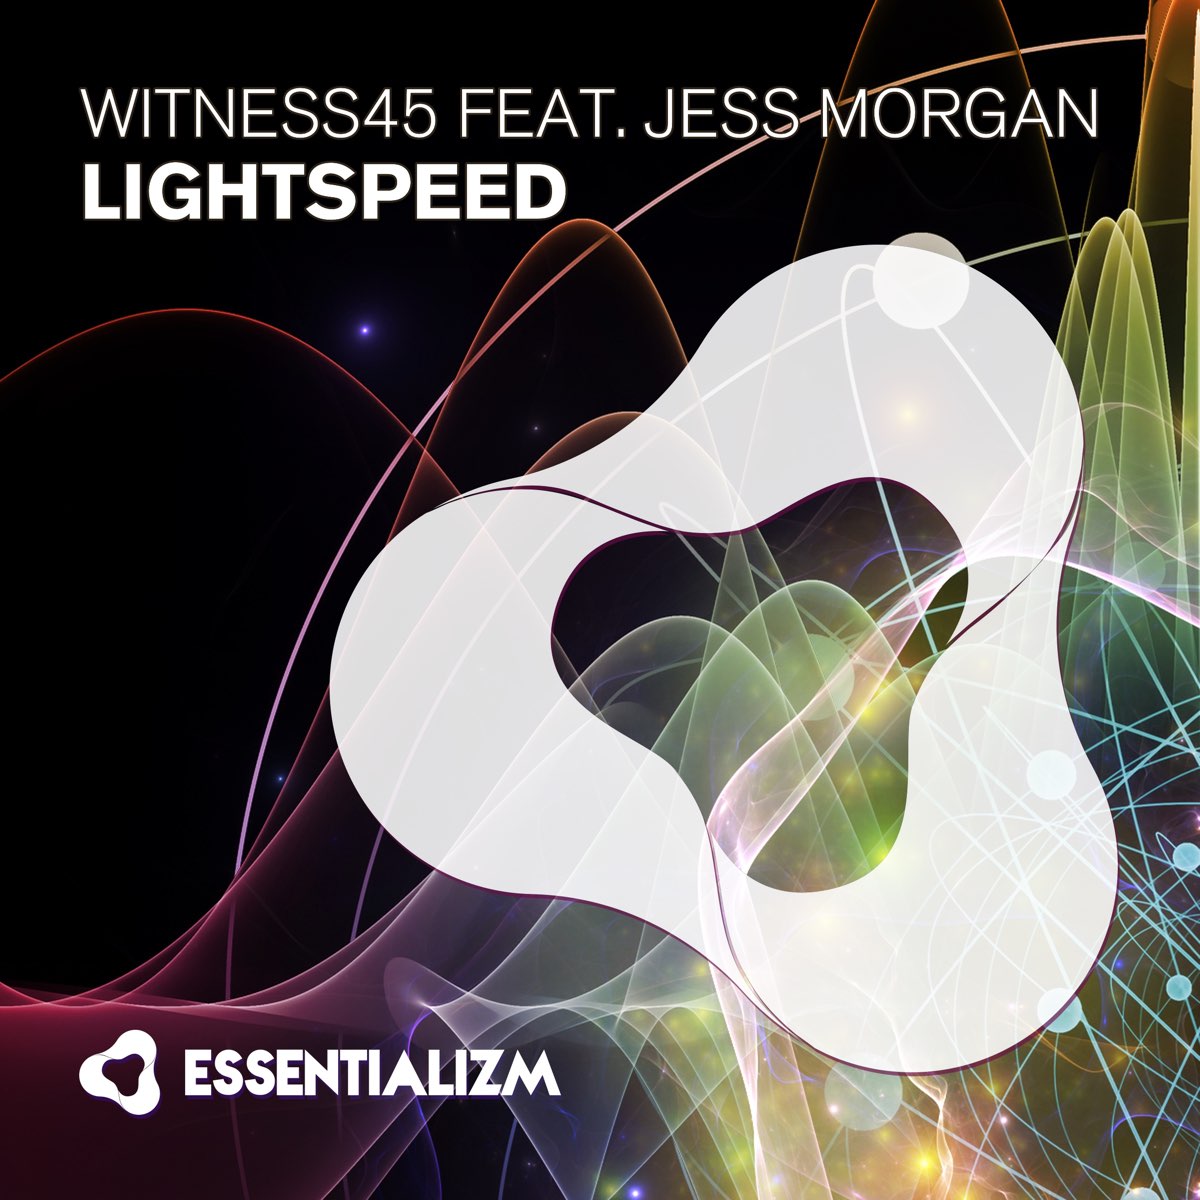 Jes Morgan. Jess Morgan Trance. Lightspeed обложка альбома. Морган feat. Feat jess